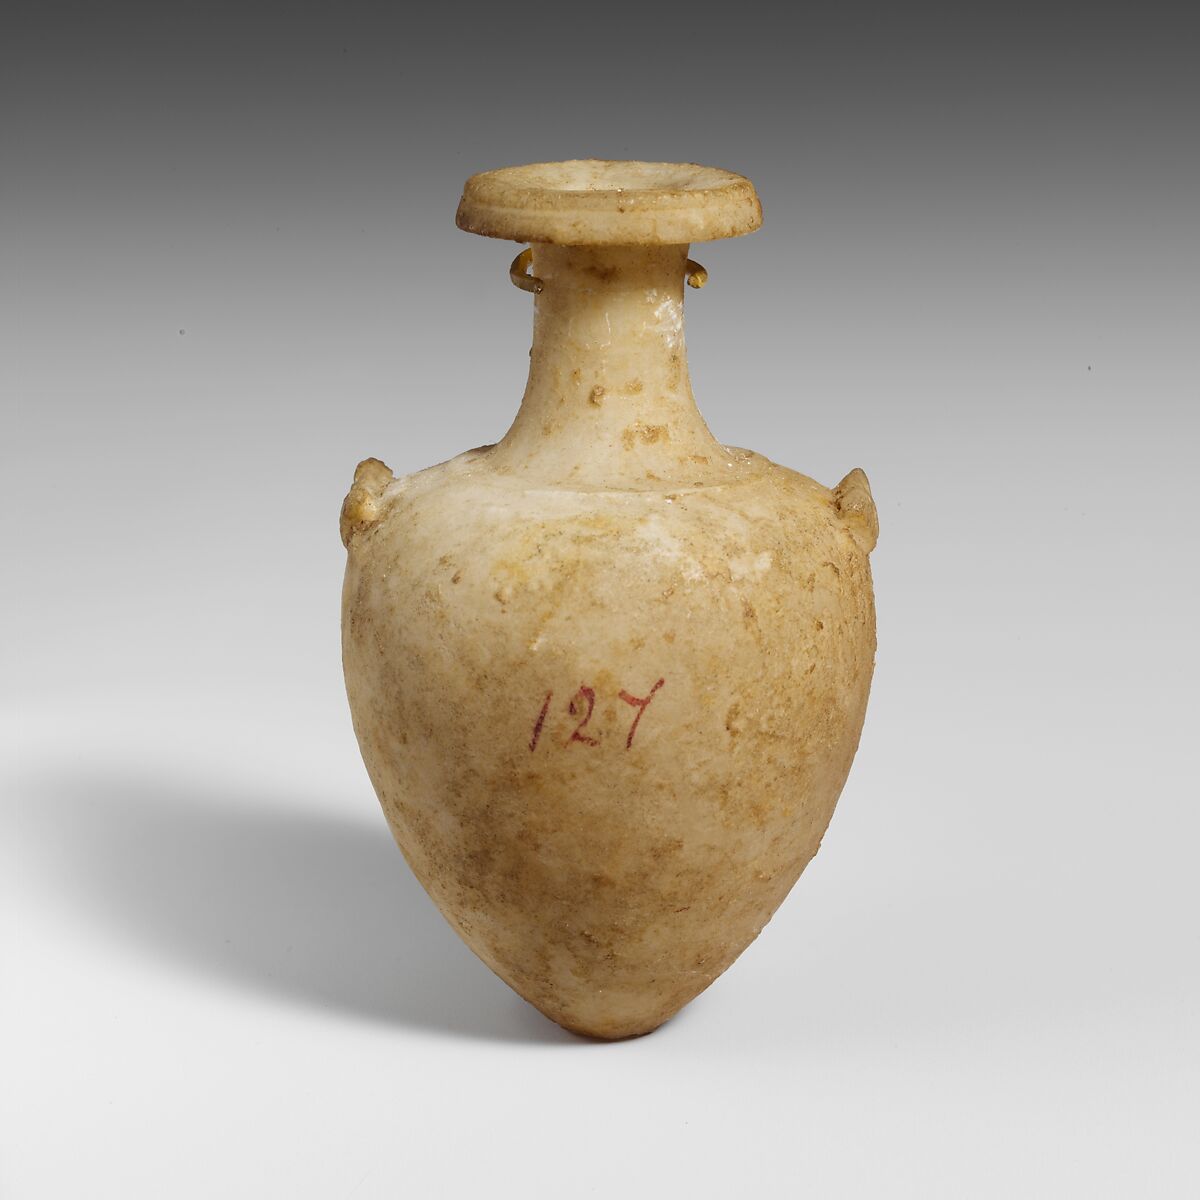 Miniature alabaster amphora (jar), Alabaster, Cypriot 